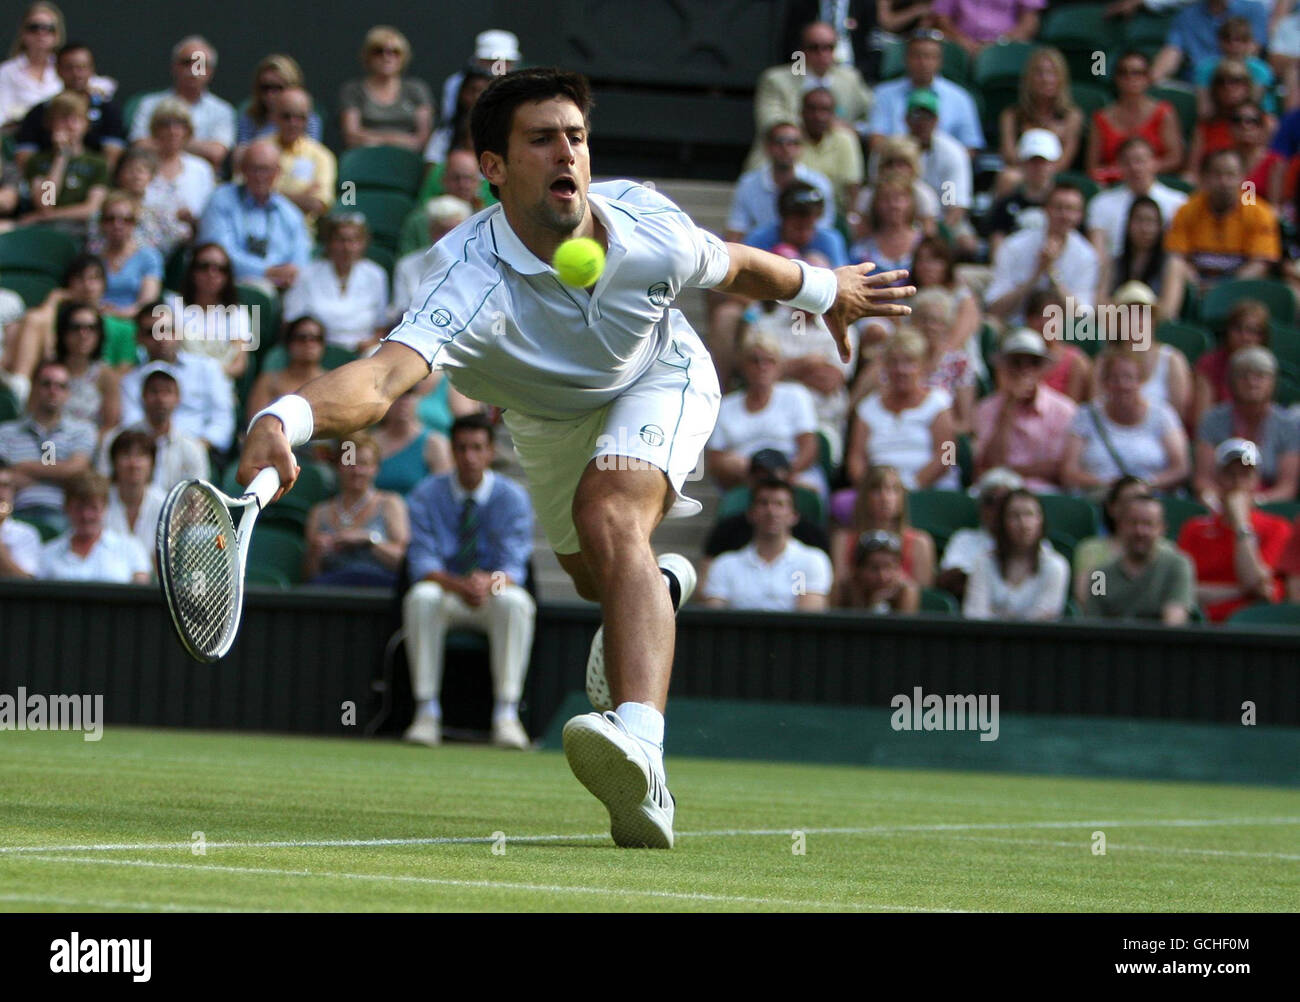 Novak djokovic hitting ball hi-res stock photography and images - Alamy